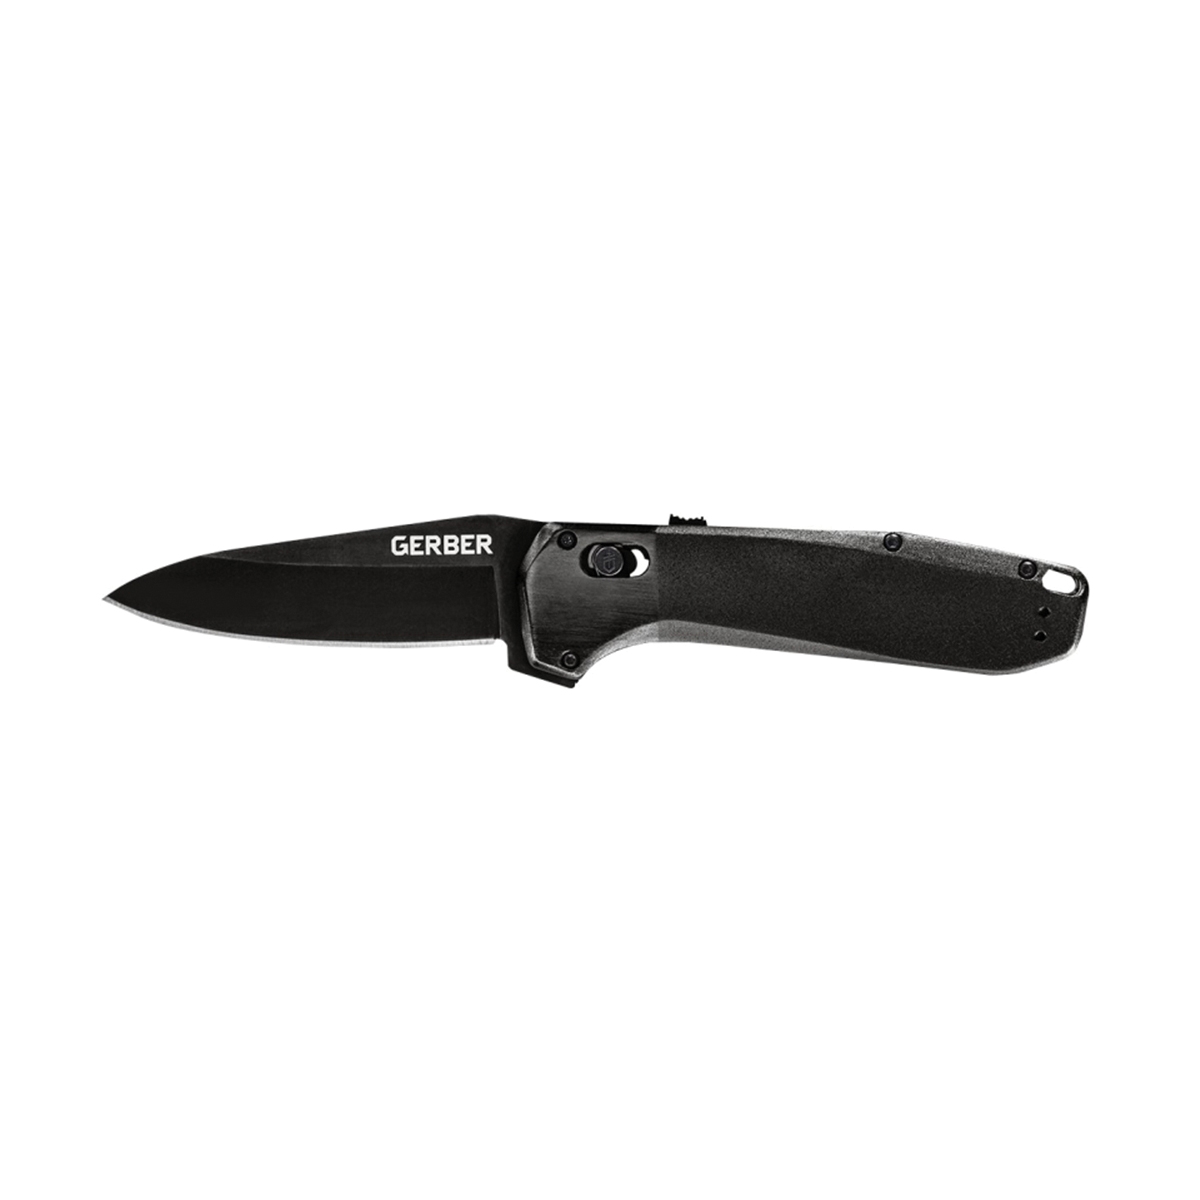 Highbrow Series 31-003674 Folding Knife, 3-1/2 in L Blade, Steel Blade, 1-Blade, Smooth Handle, Black Handle